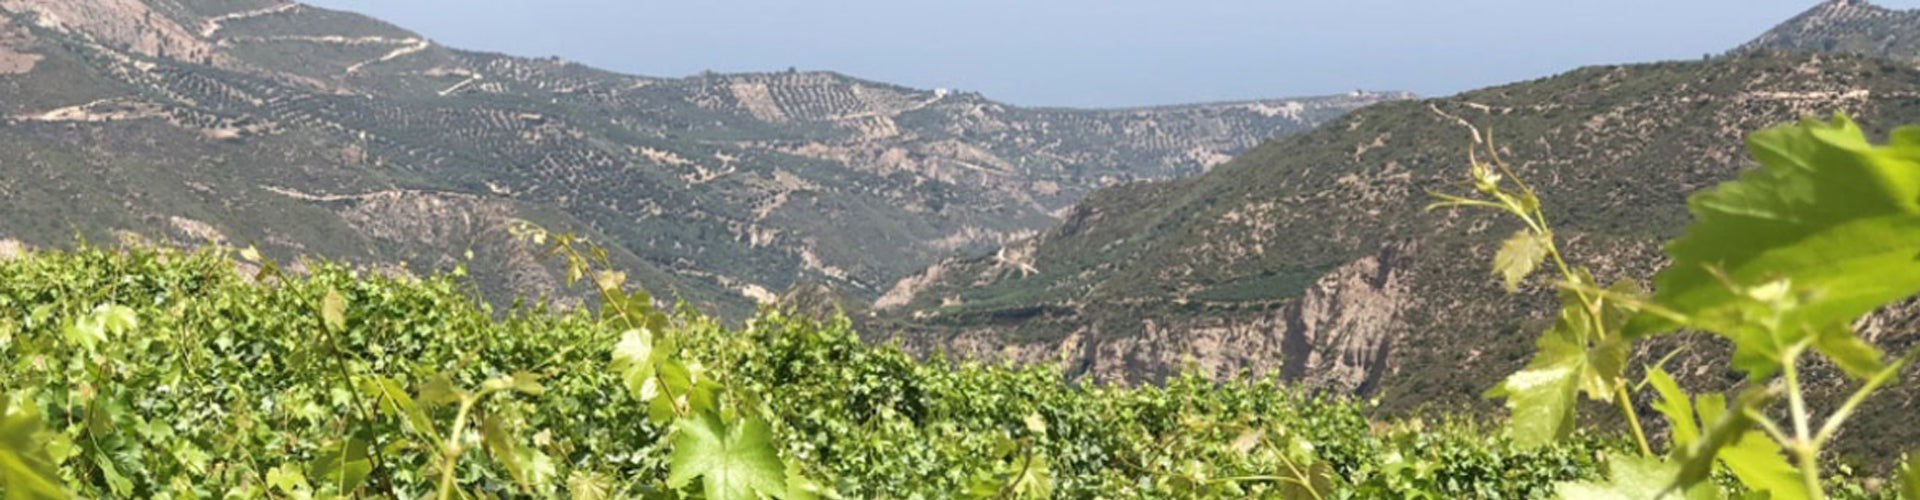 Vineyards in the Peloponnese Region of Greece